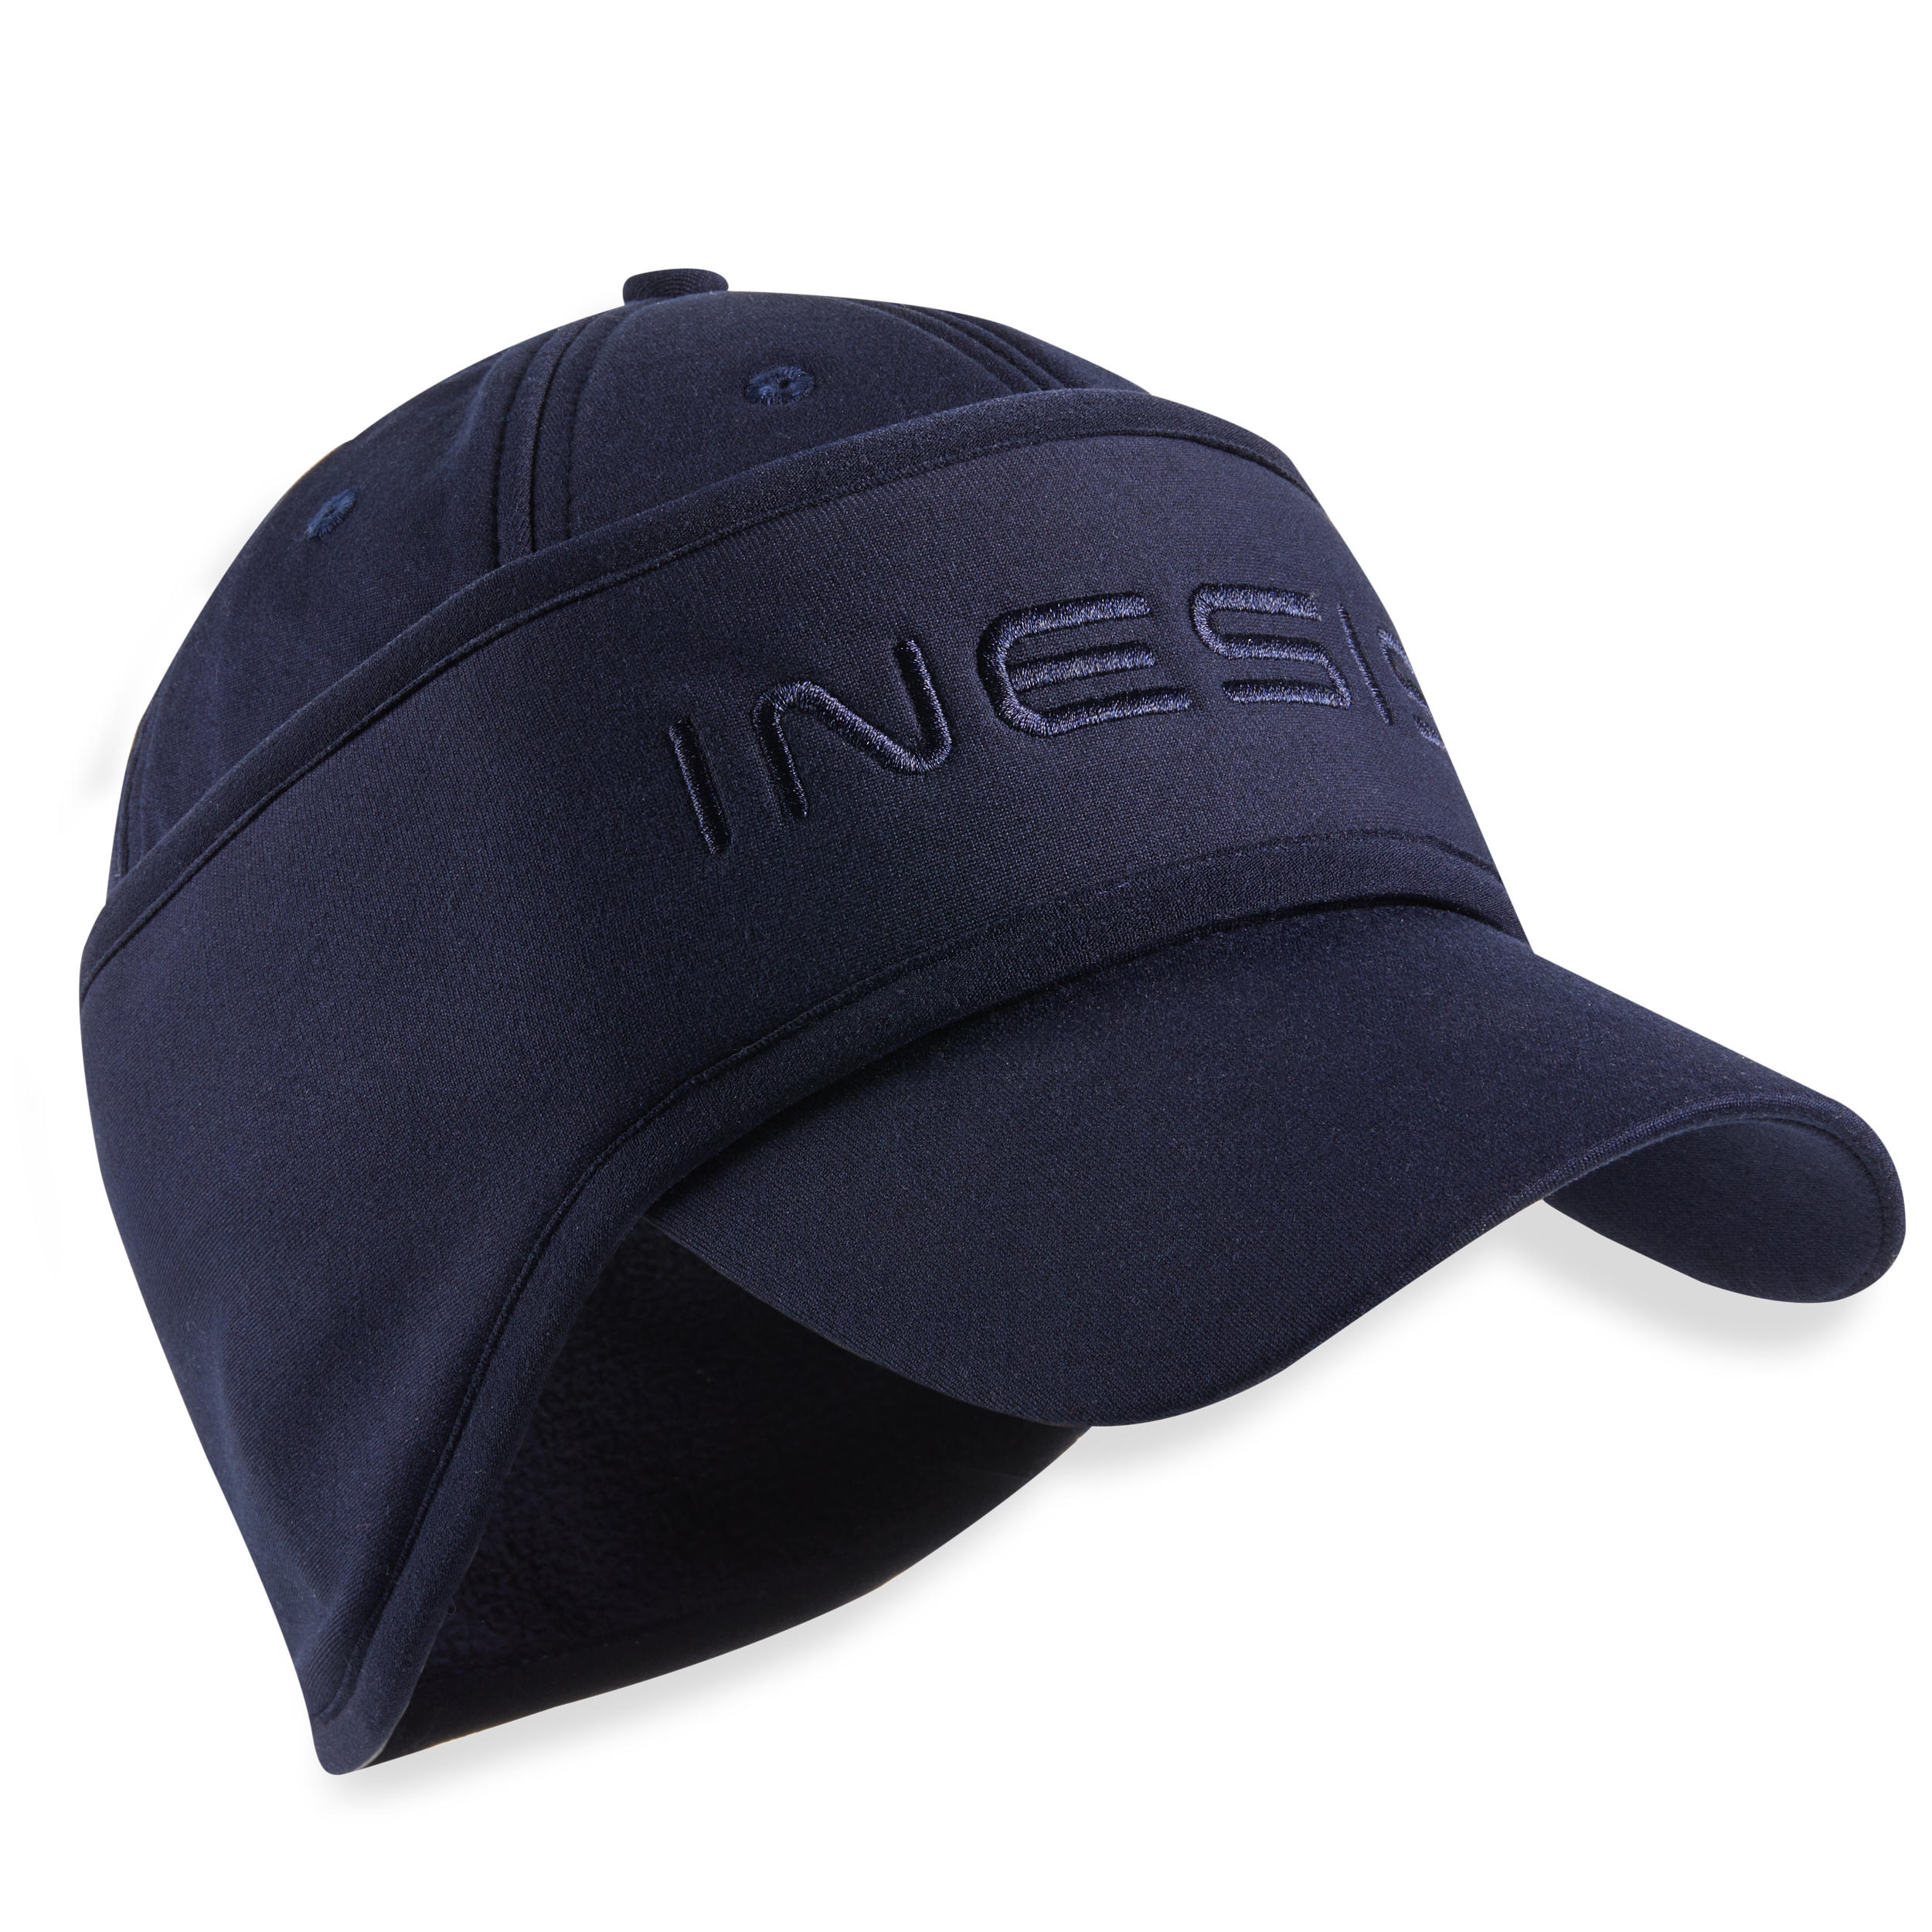 Headband cap for winter golf - CW500 navy blue 1/1